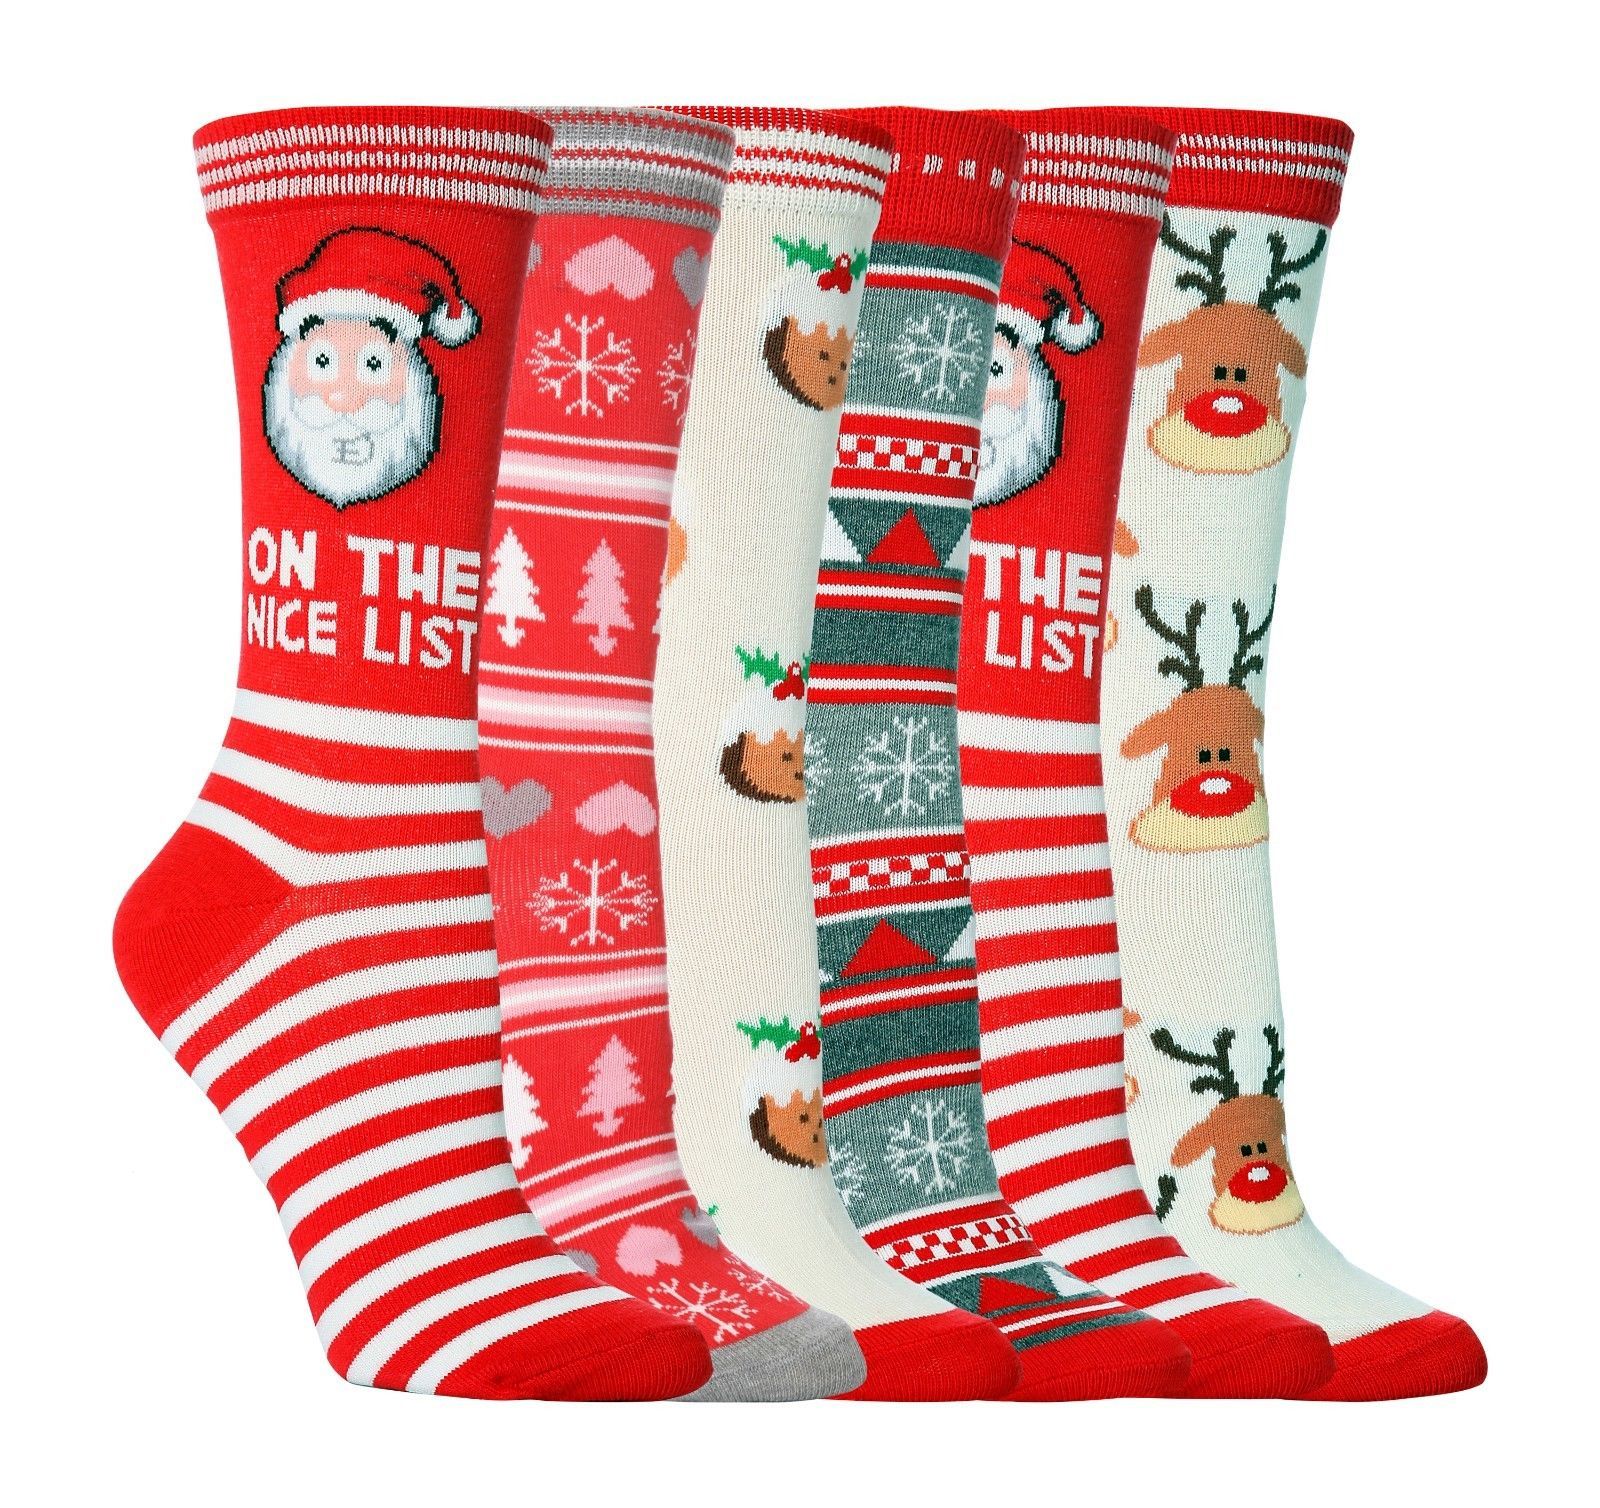 Sock Snob - Womens Fun Cute Novelty Christmas Winter Cotton Crew Socks, 5-9 US